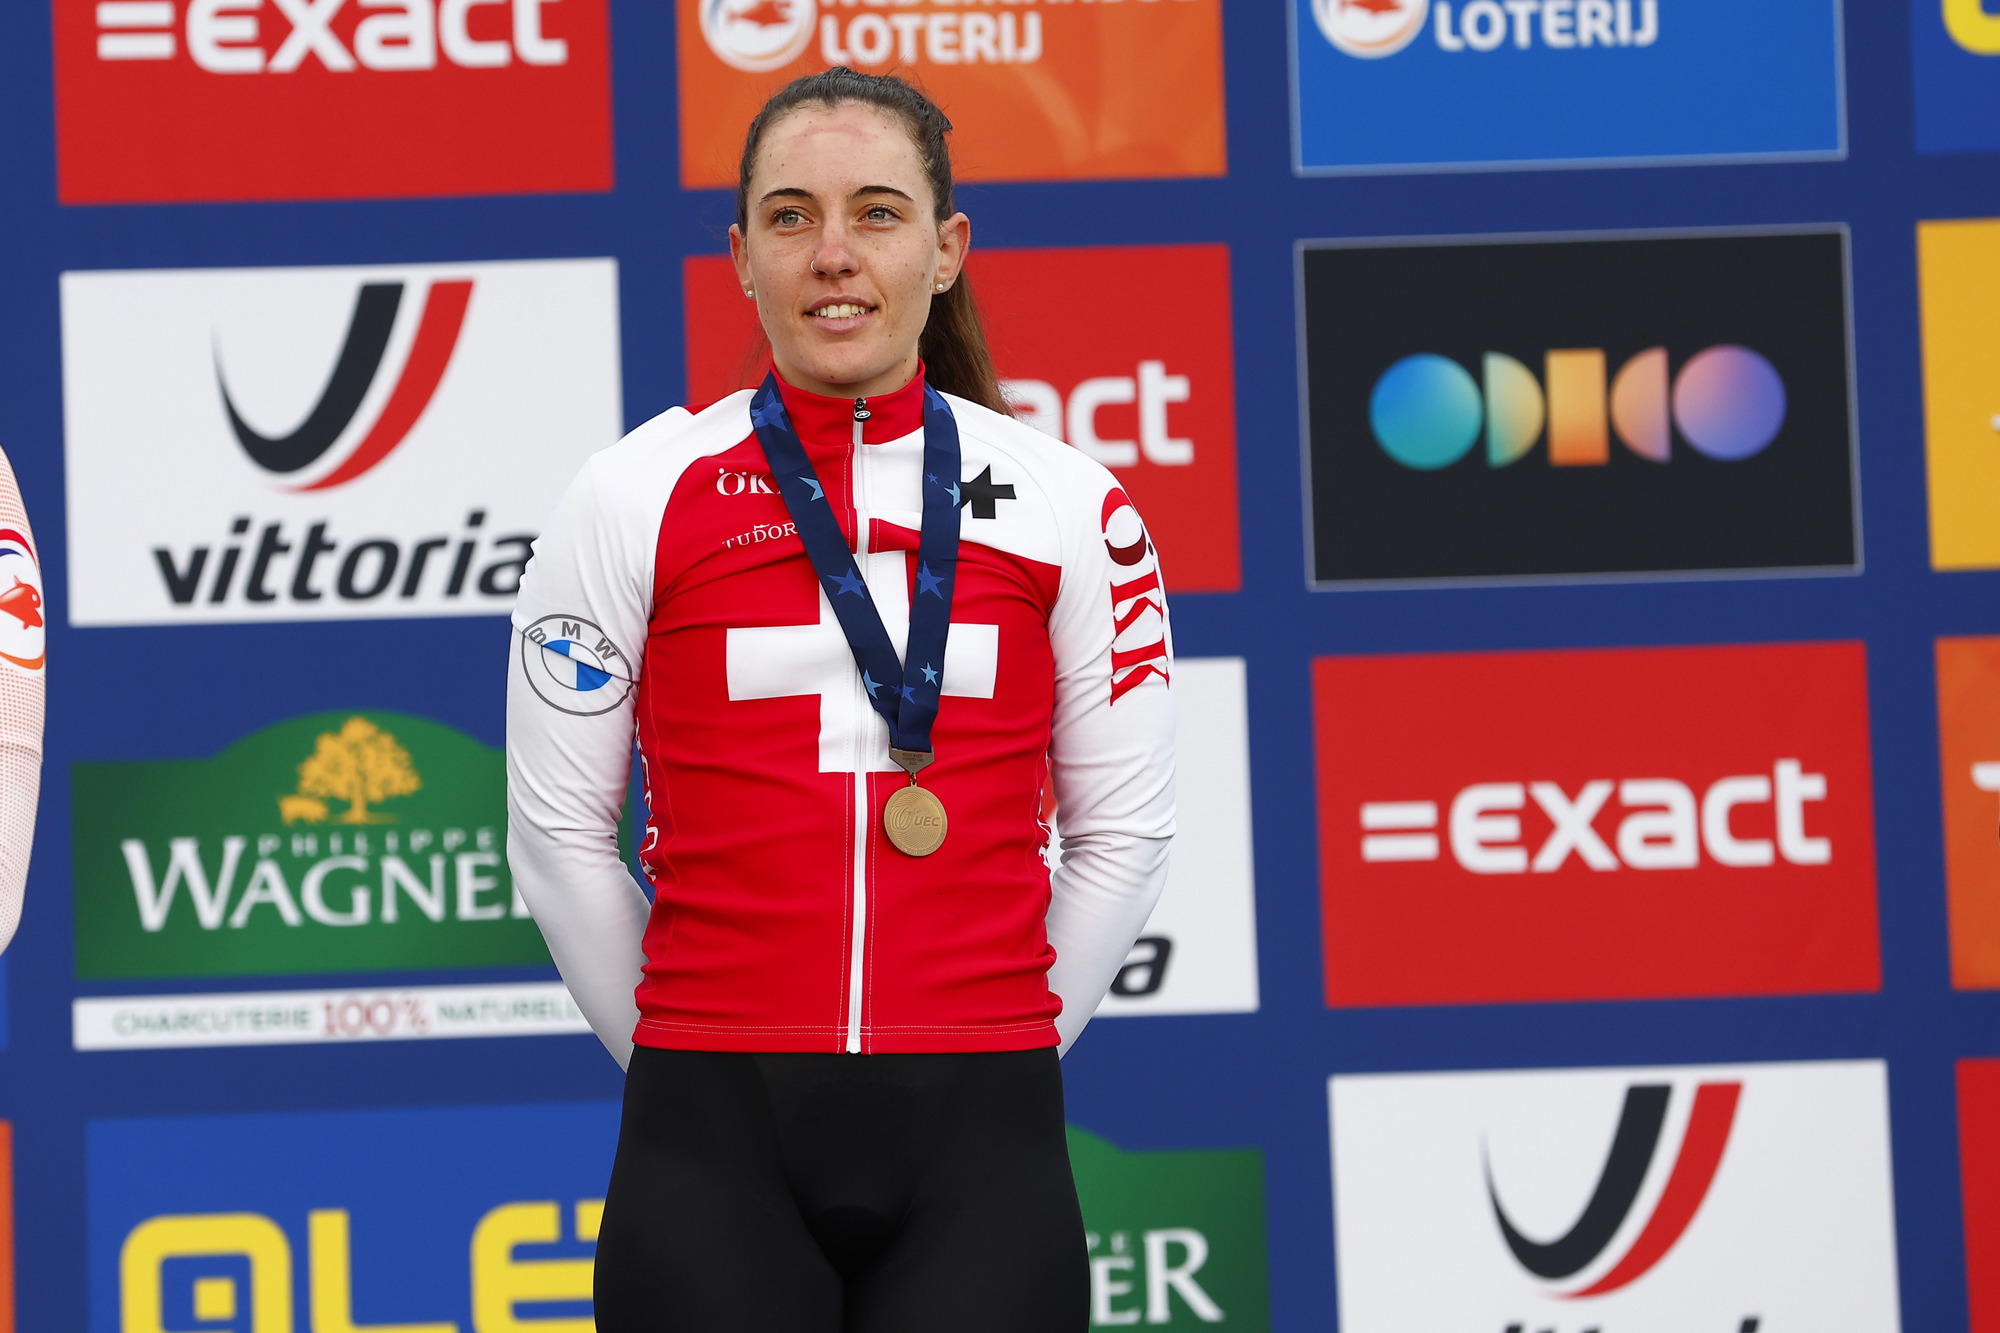 Road European Championships U23: Linda Zanetti wins bronze medal